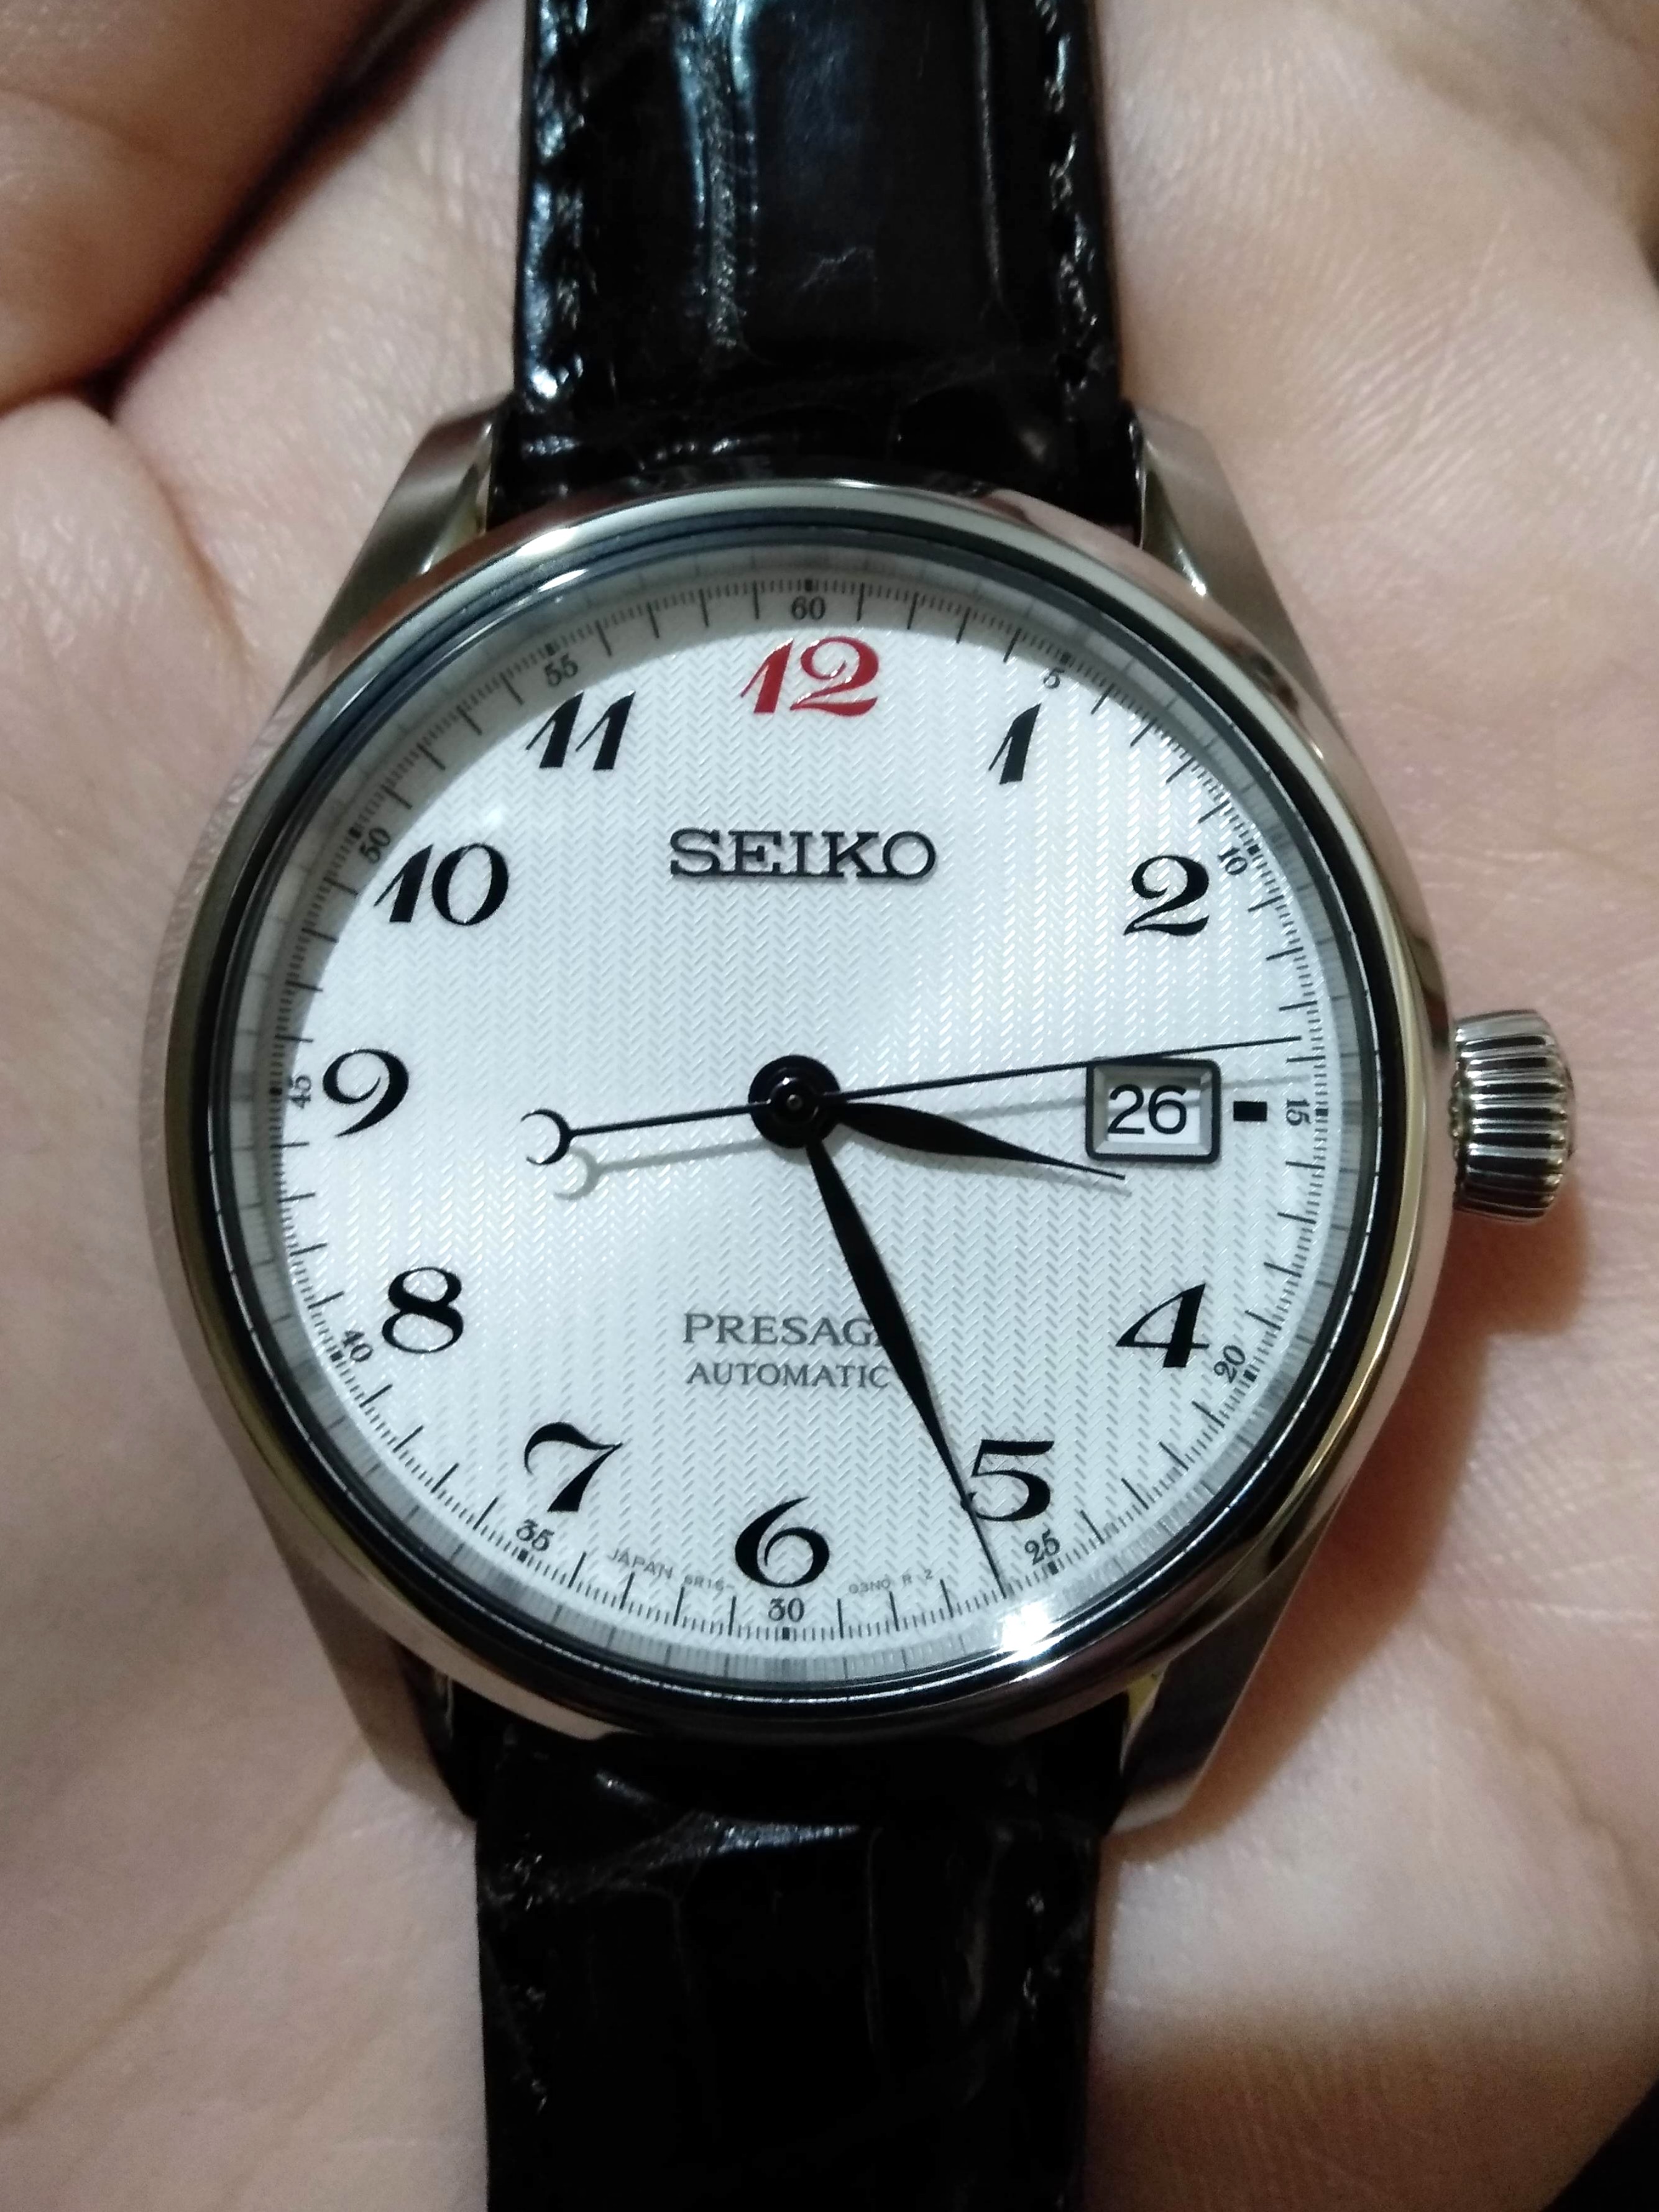 Seiko Presage Automatic With Hand-Winding SARX041 